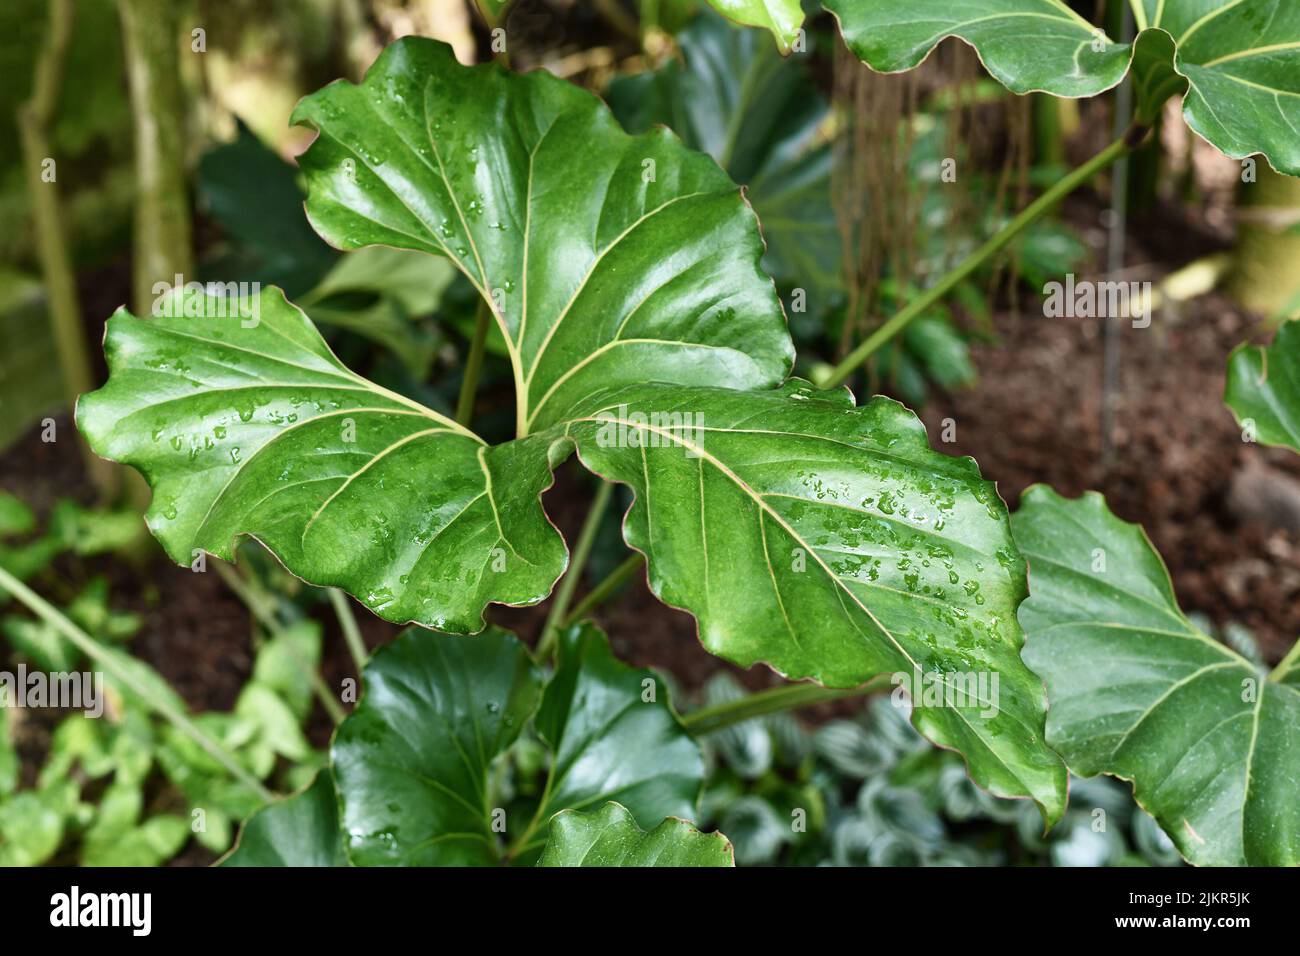 Hoja grande ondulada con bordes ondulados de una exótica planta 'Anthurium brownii' Foto de stock